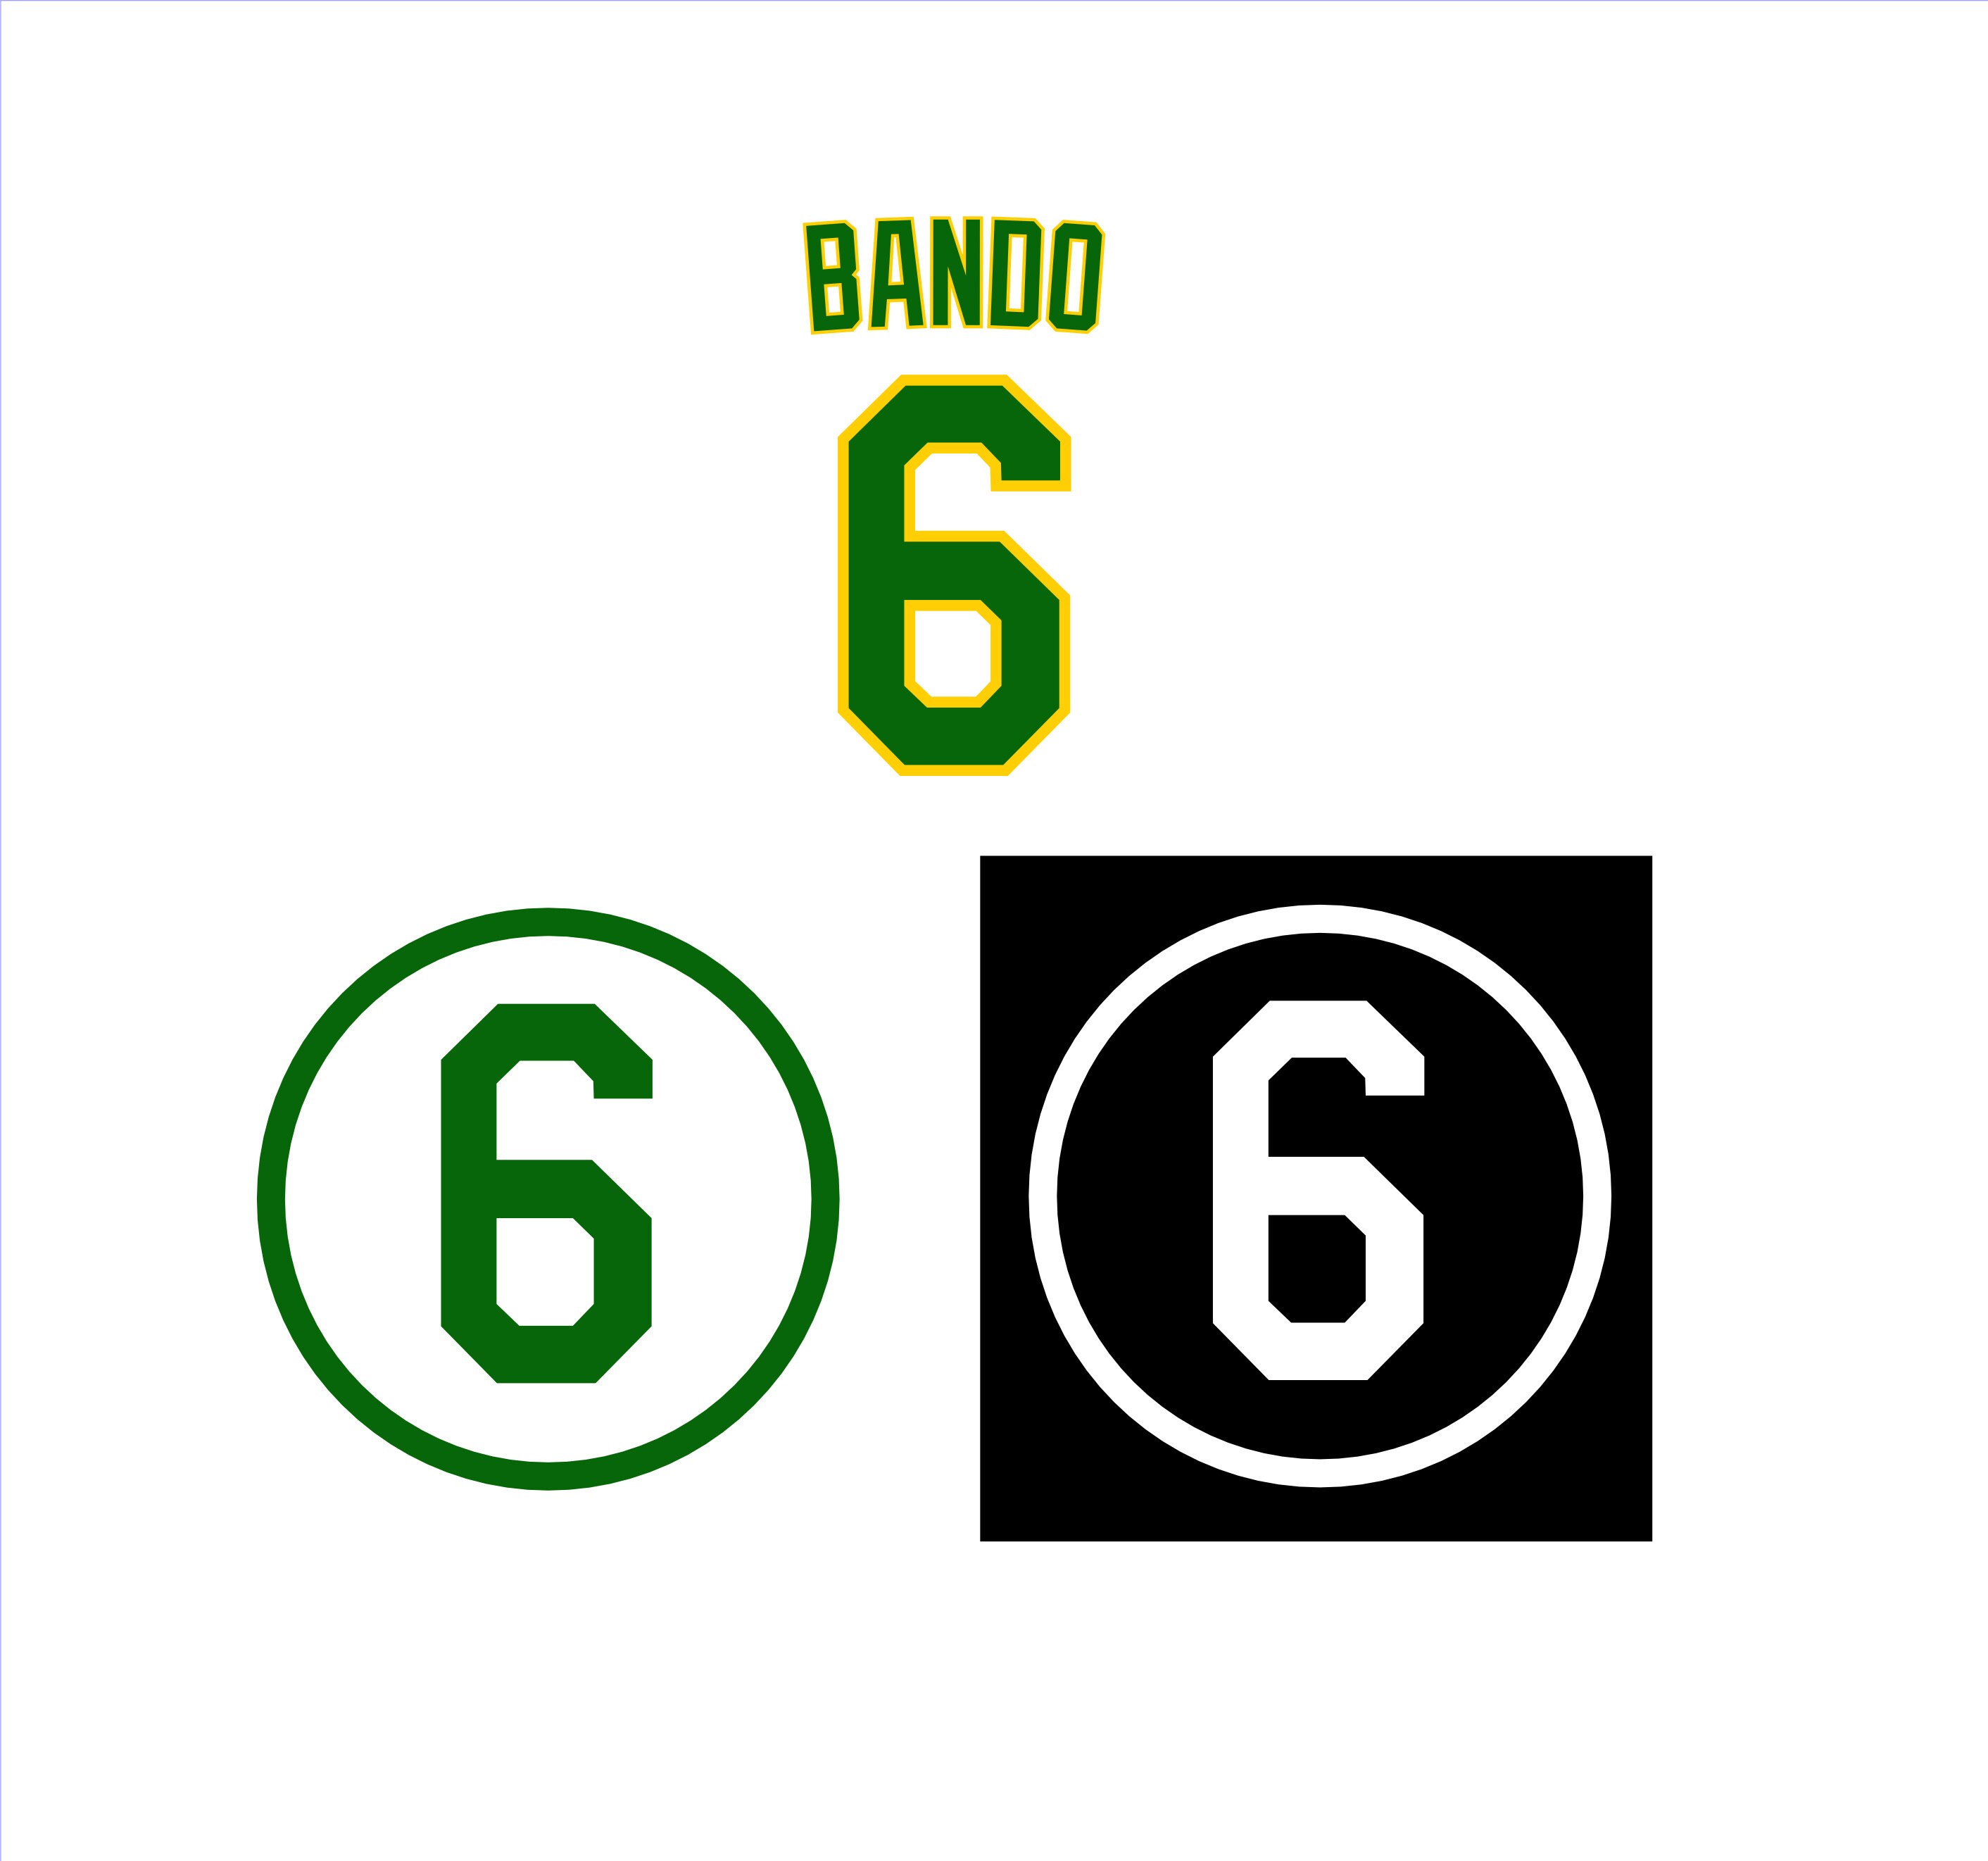 SAL BANDO Sticker Decal Oakland A's 